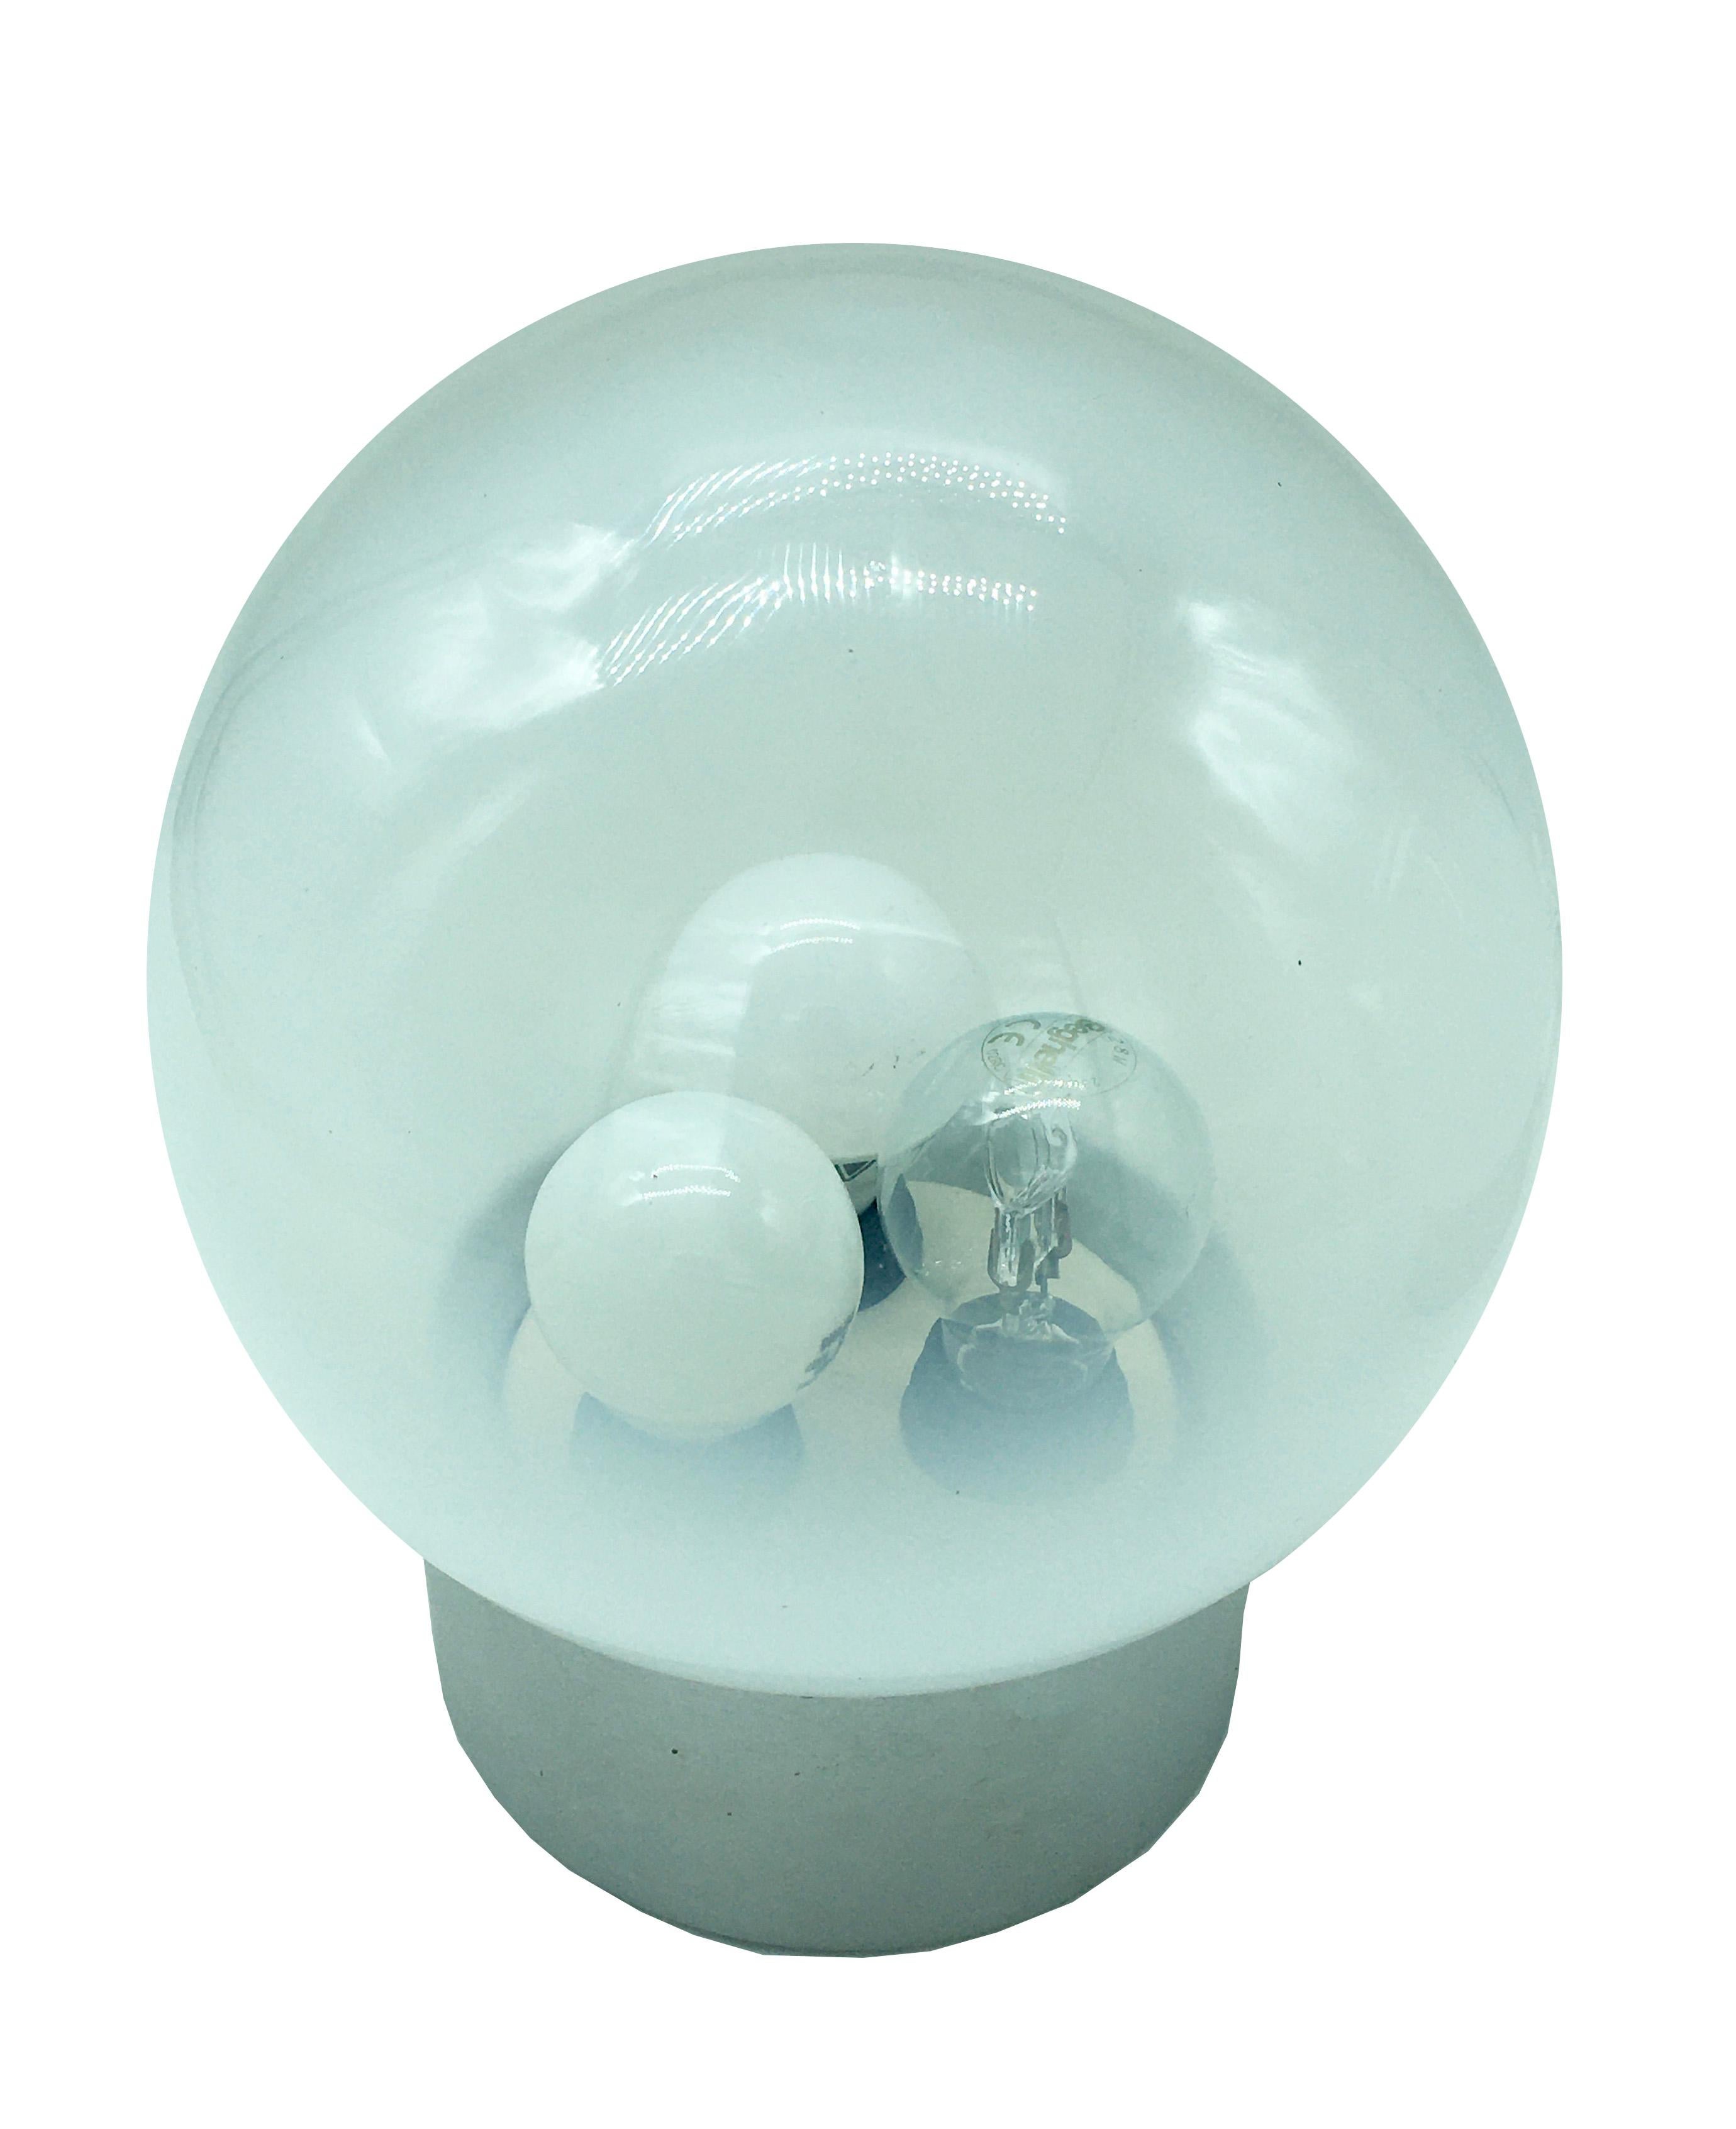 Italian Pair of Spherical Blown Glass Table Lamps, Chromed Metal Base, Mazzega, Italy